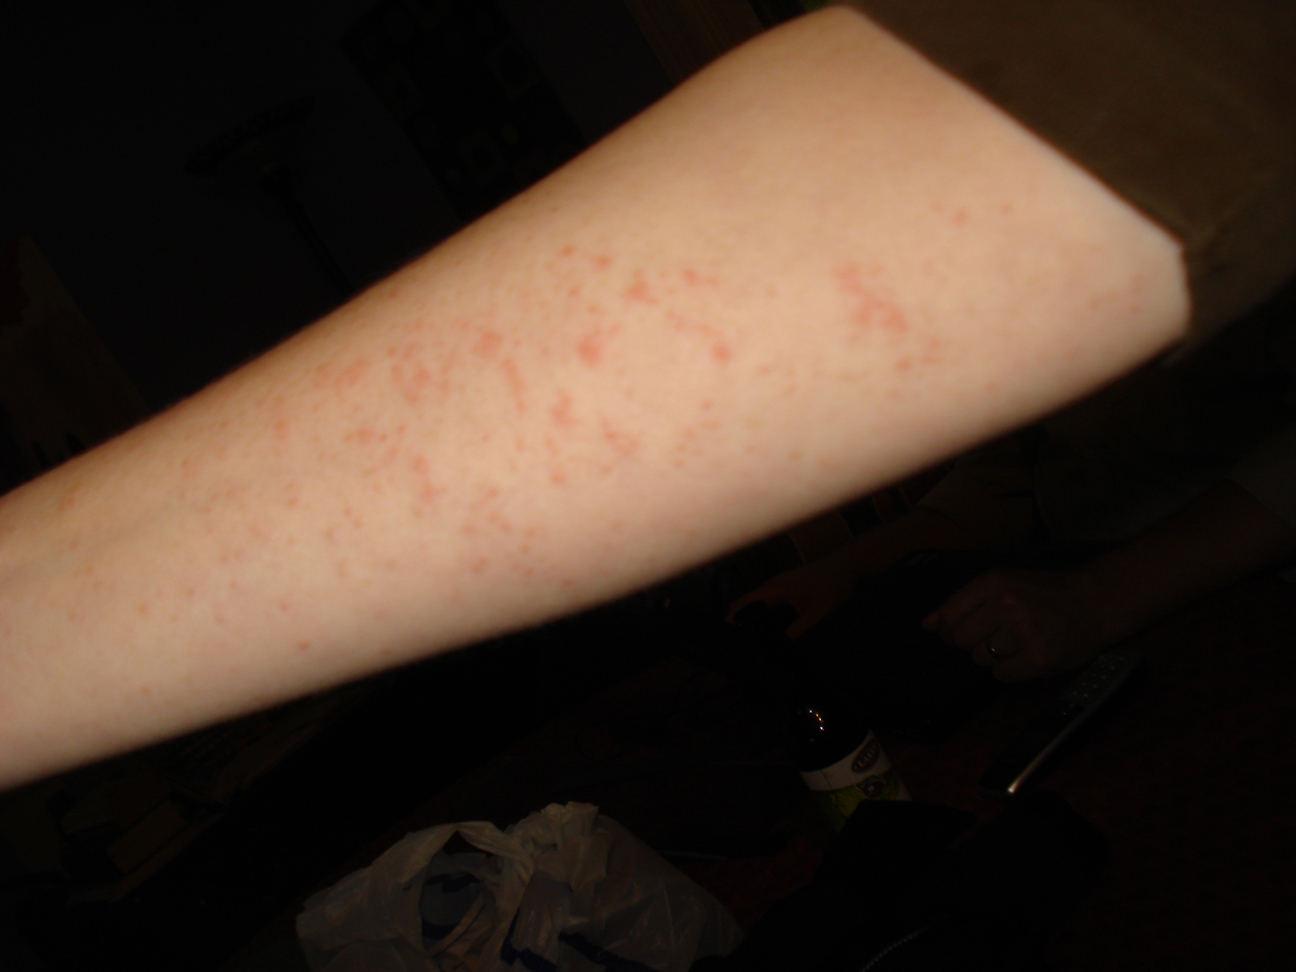 Small, itchy bumps on forearm (rash?) - Dermatology - MedHelp